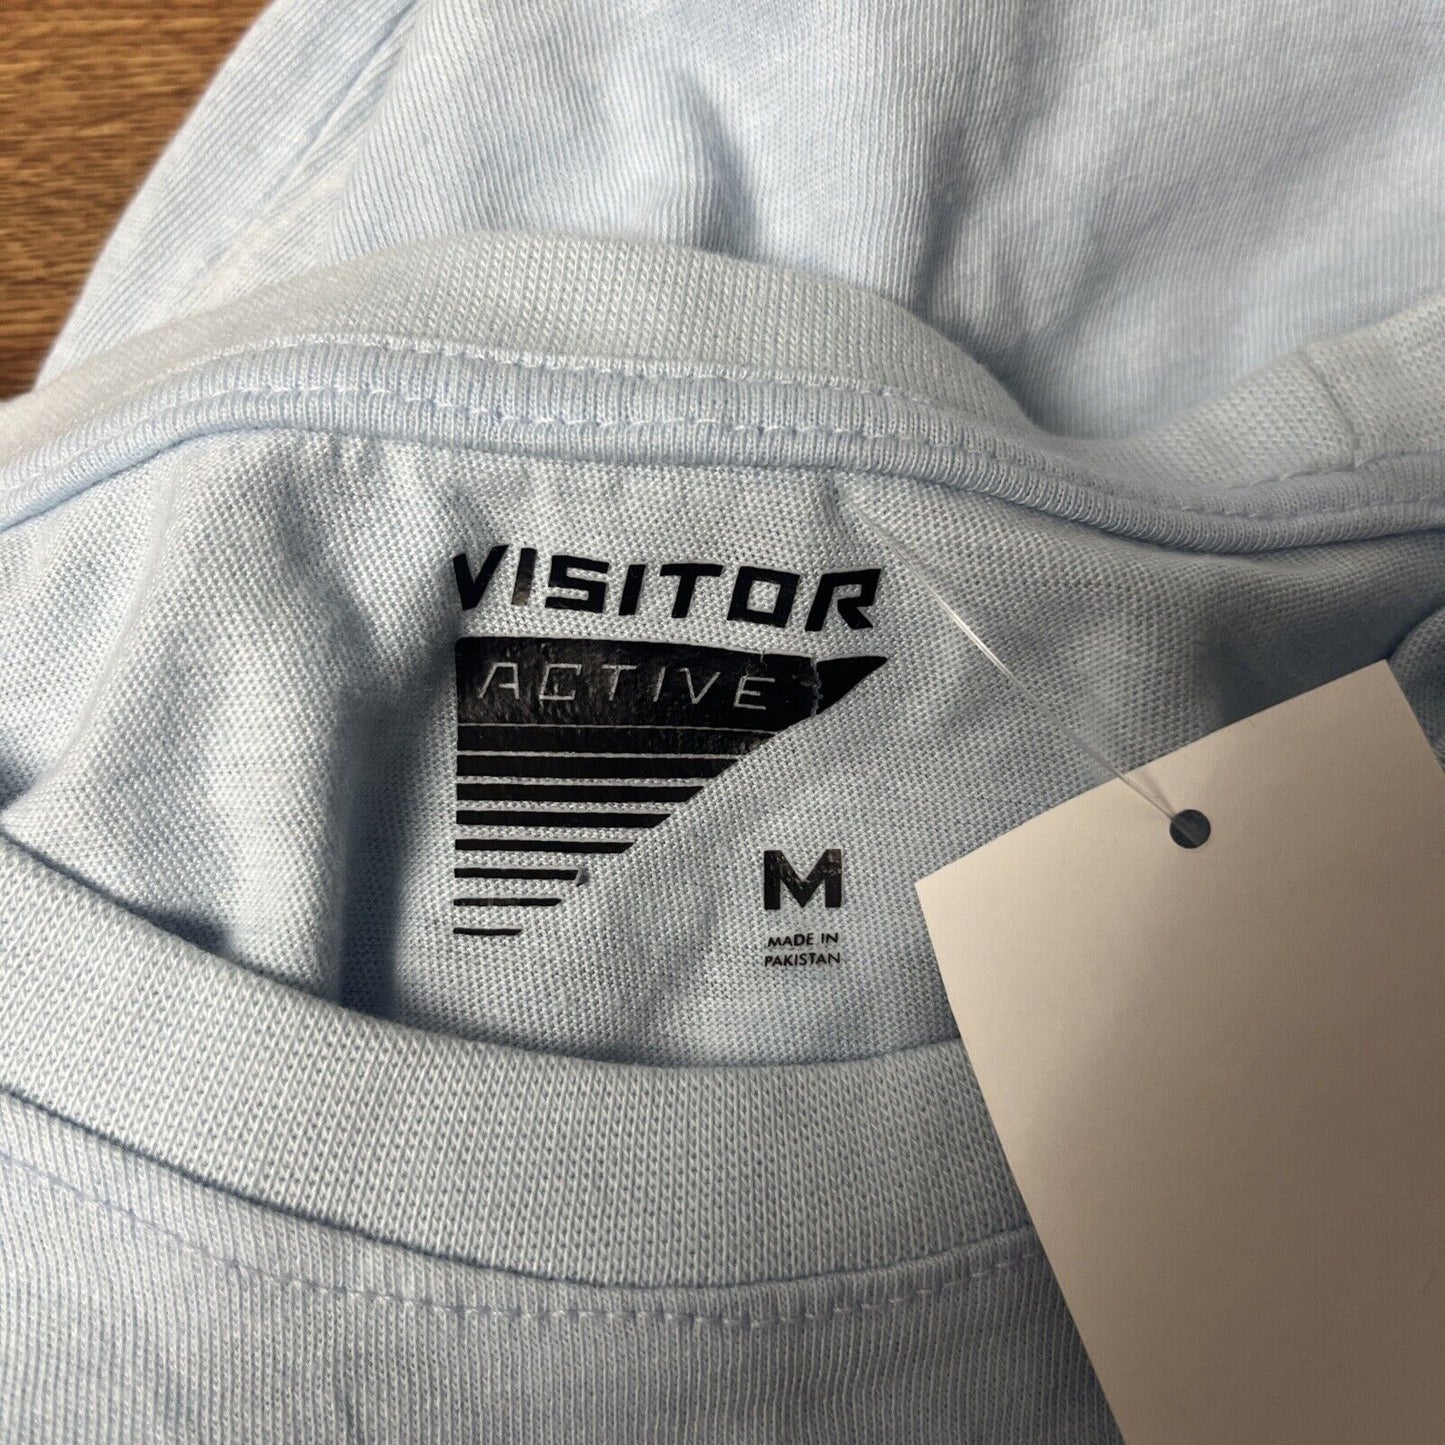 Visitor Men's Blue Crew Neck Short Sleeves Chest Pocket Pullover T Shirt Size M